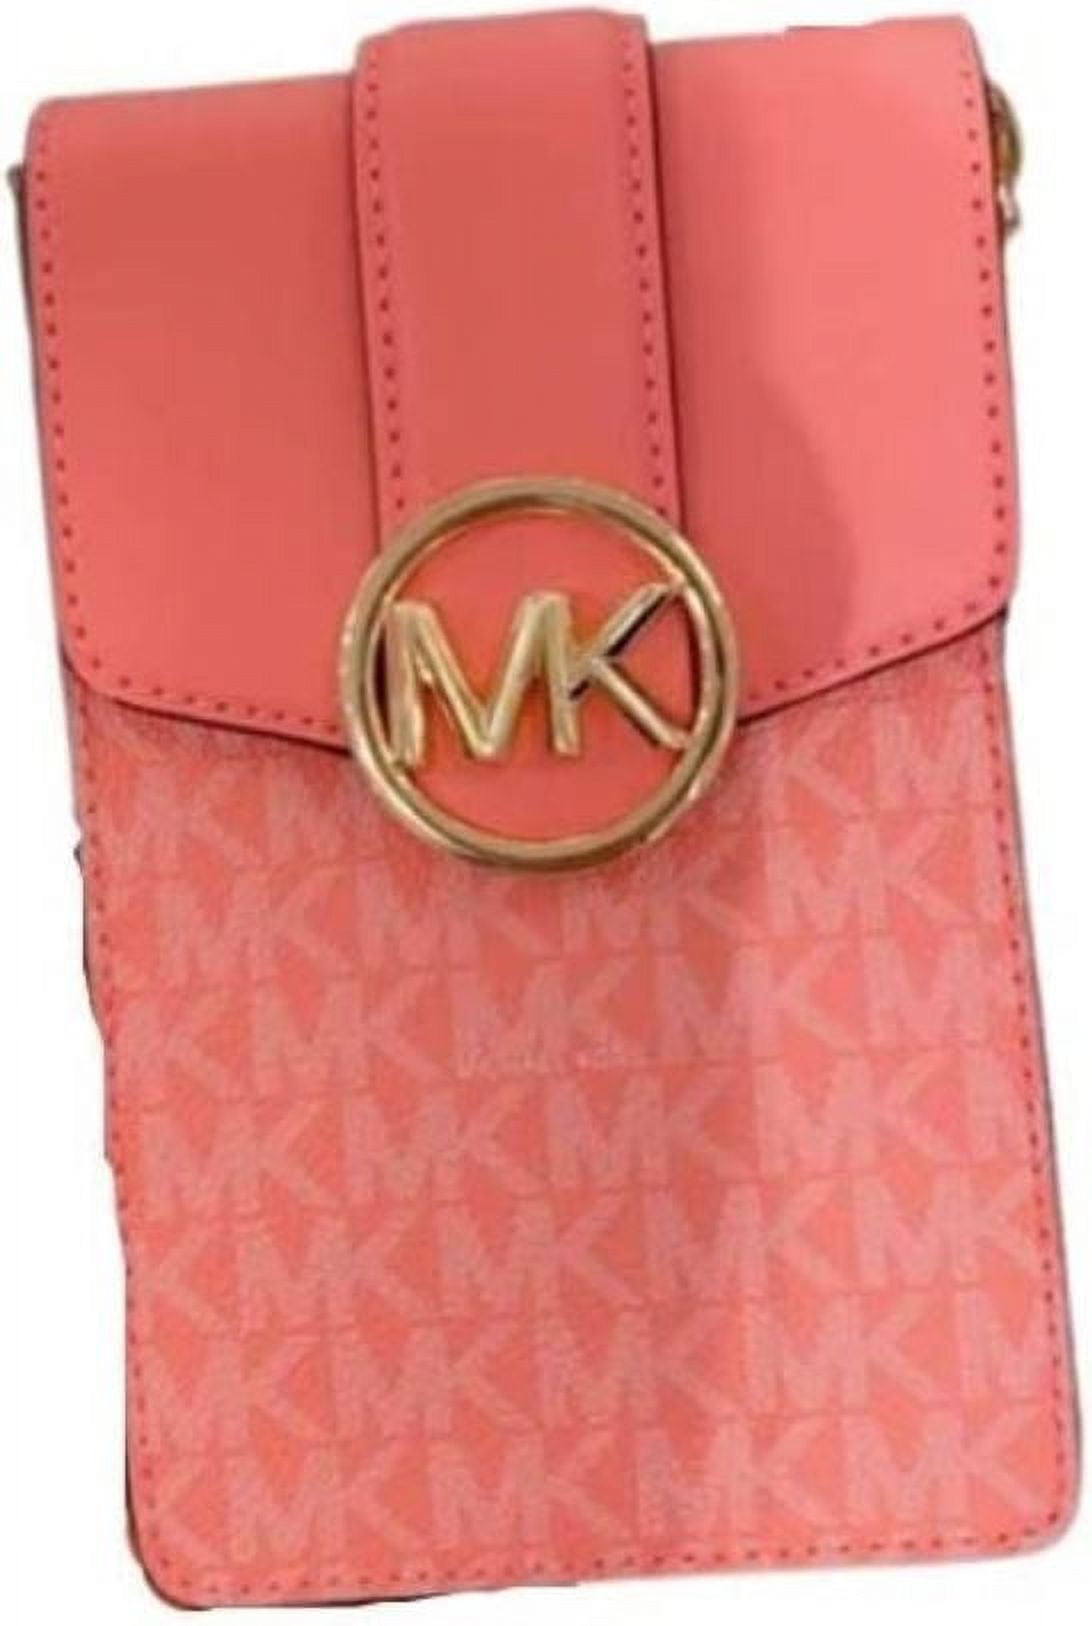 NWT Michael Kors Carmen Small Color-Block Faux Leather Phone Crossbody Bag  $348